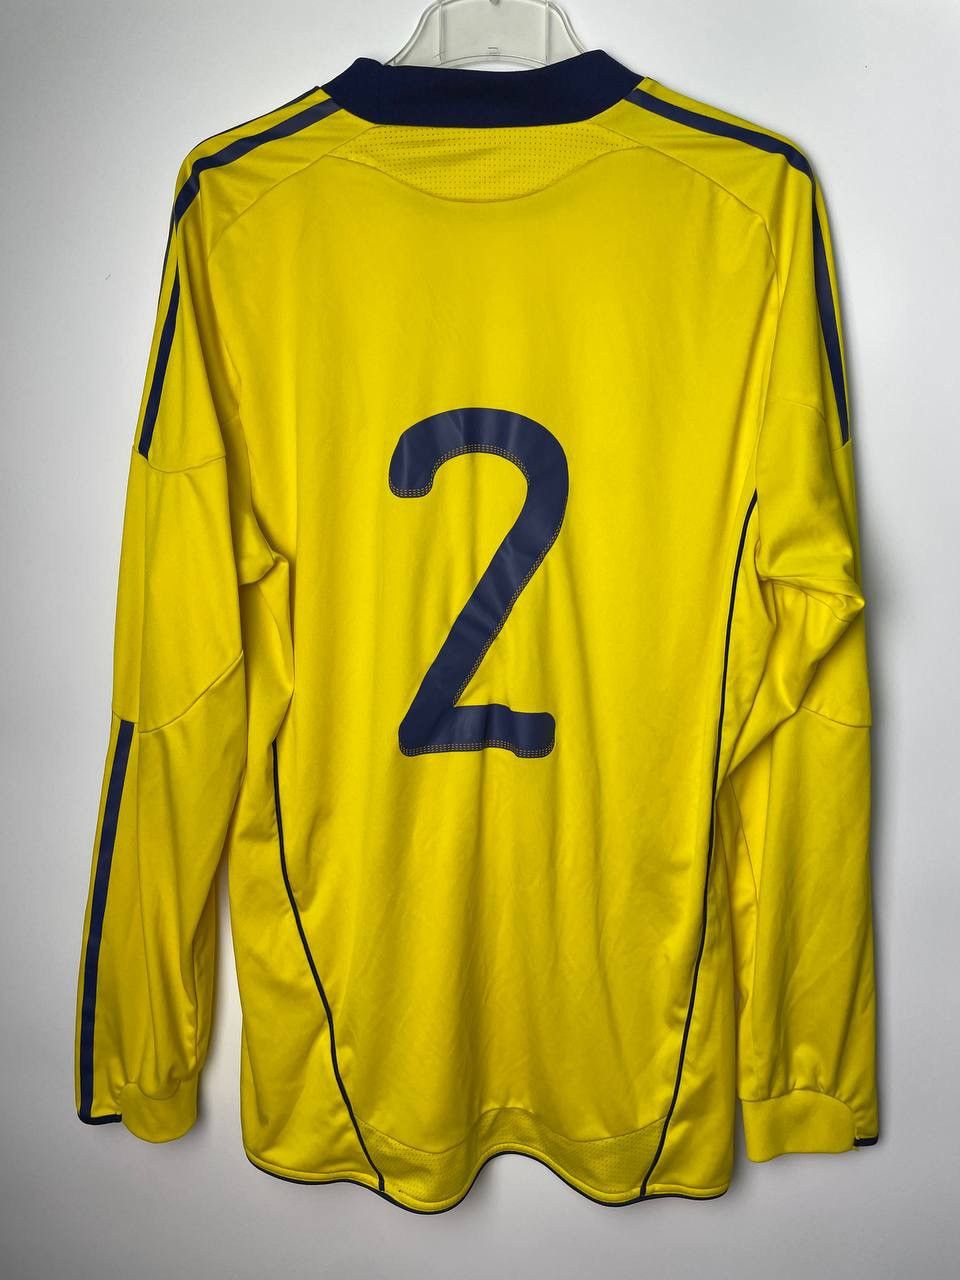 Adidas 2010-2011 adidas Scotland Away Long Sleeve Football Shirt Size US XL / EU 56 / 4 - 2 Preview